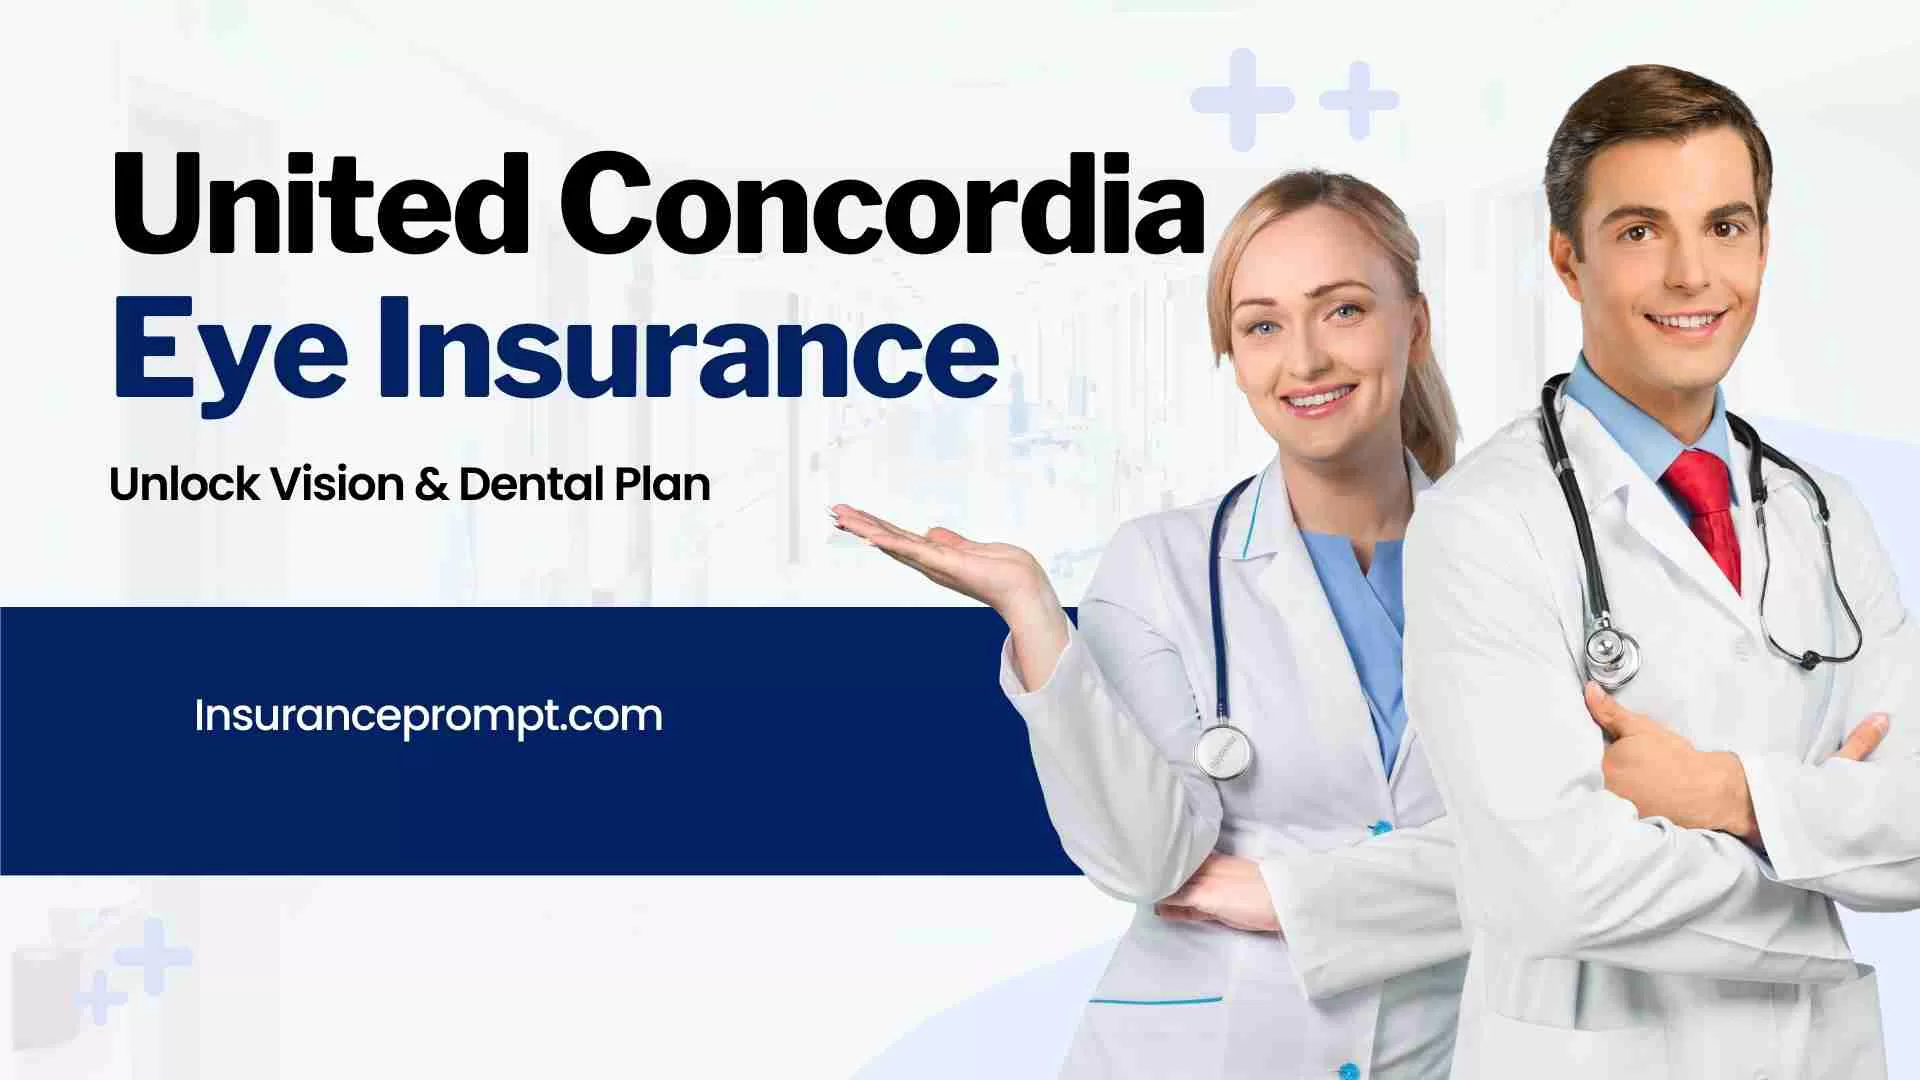 United Concordia Eye Insurance Unlock Vision & Dental Plan